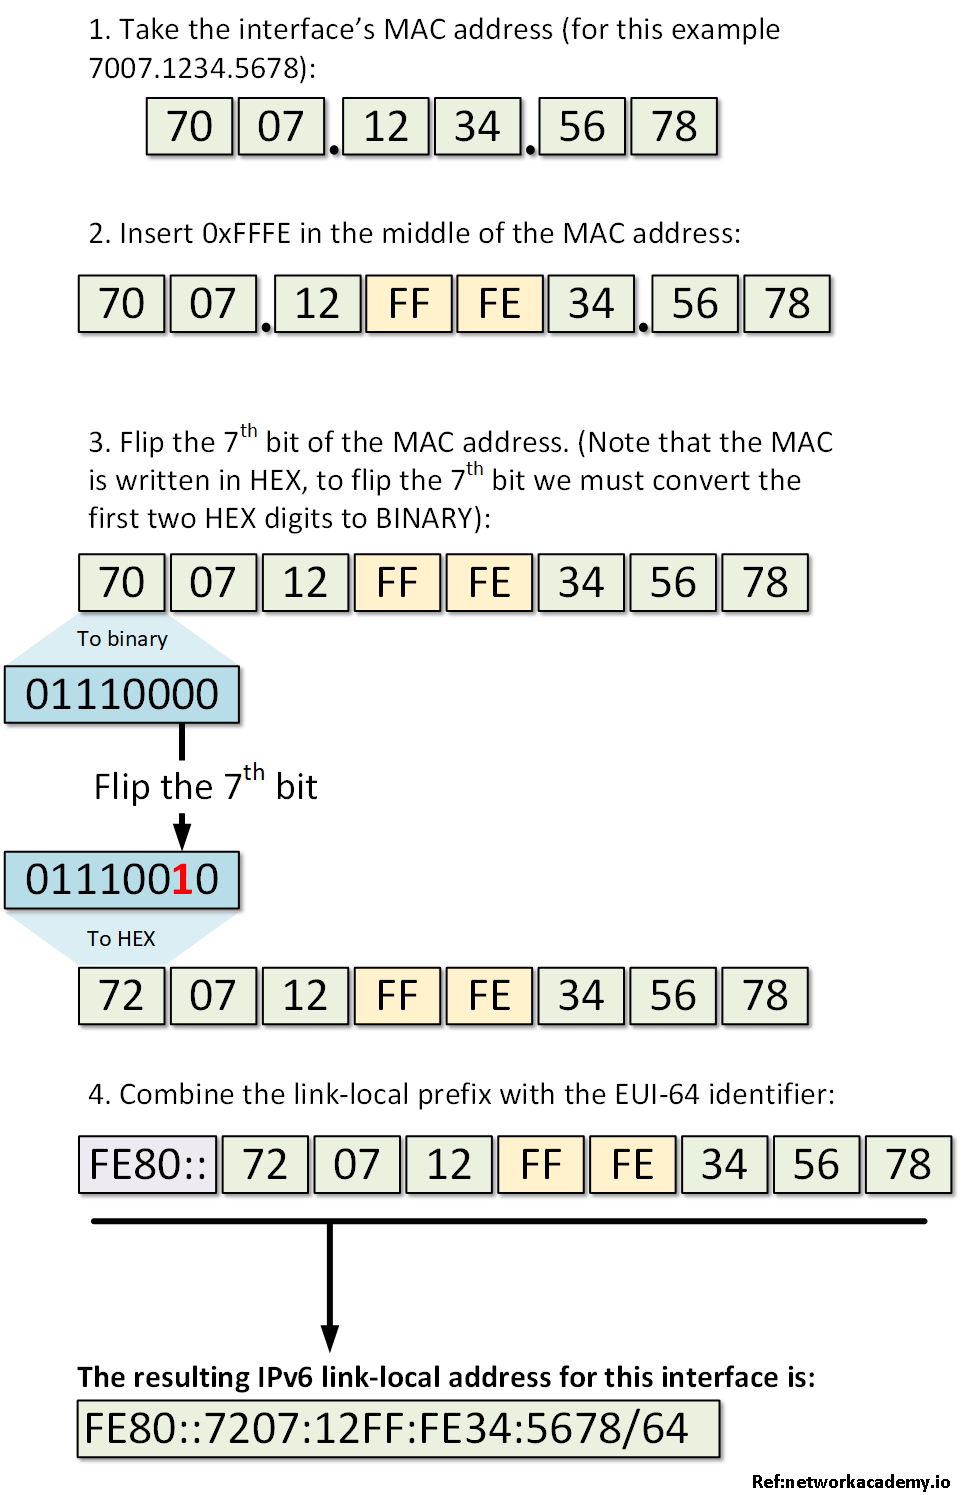 convert mac address into ipv6 eui 64